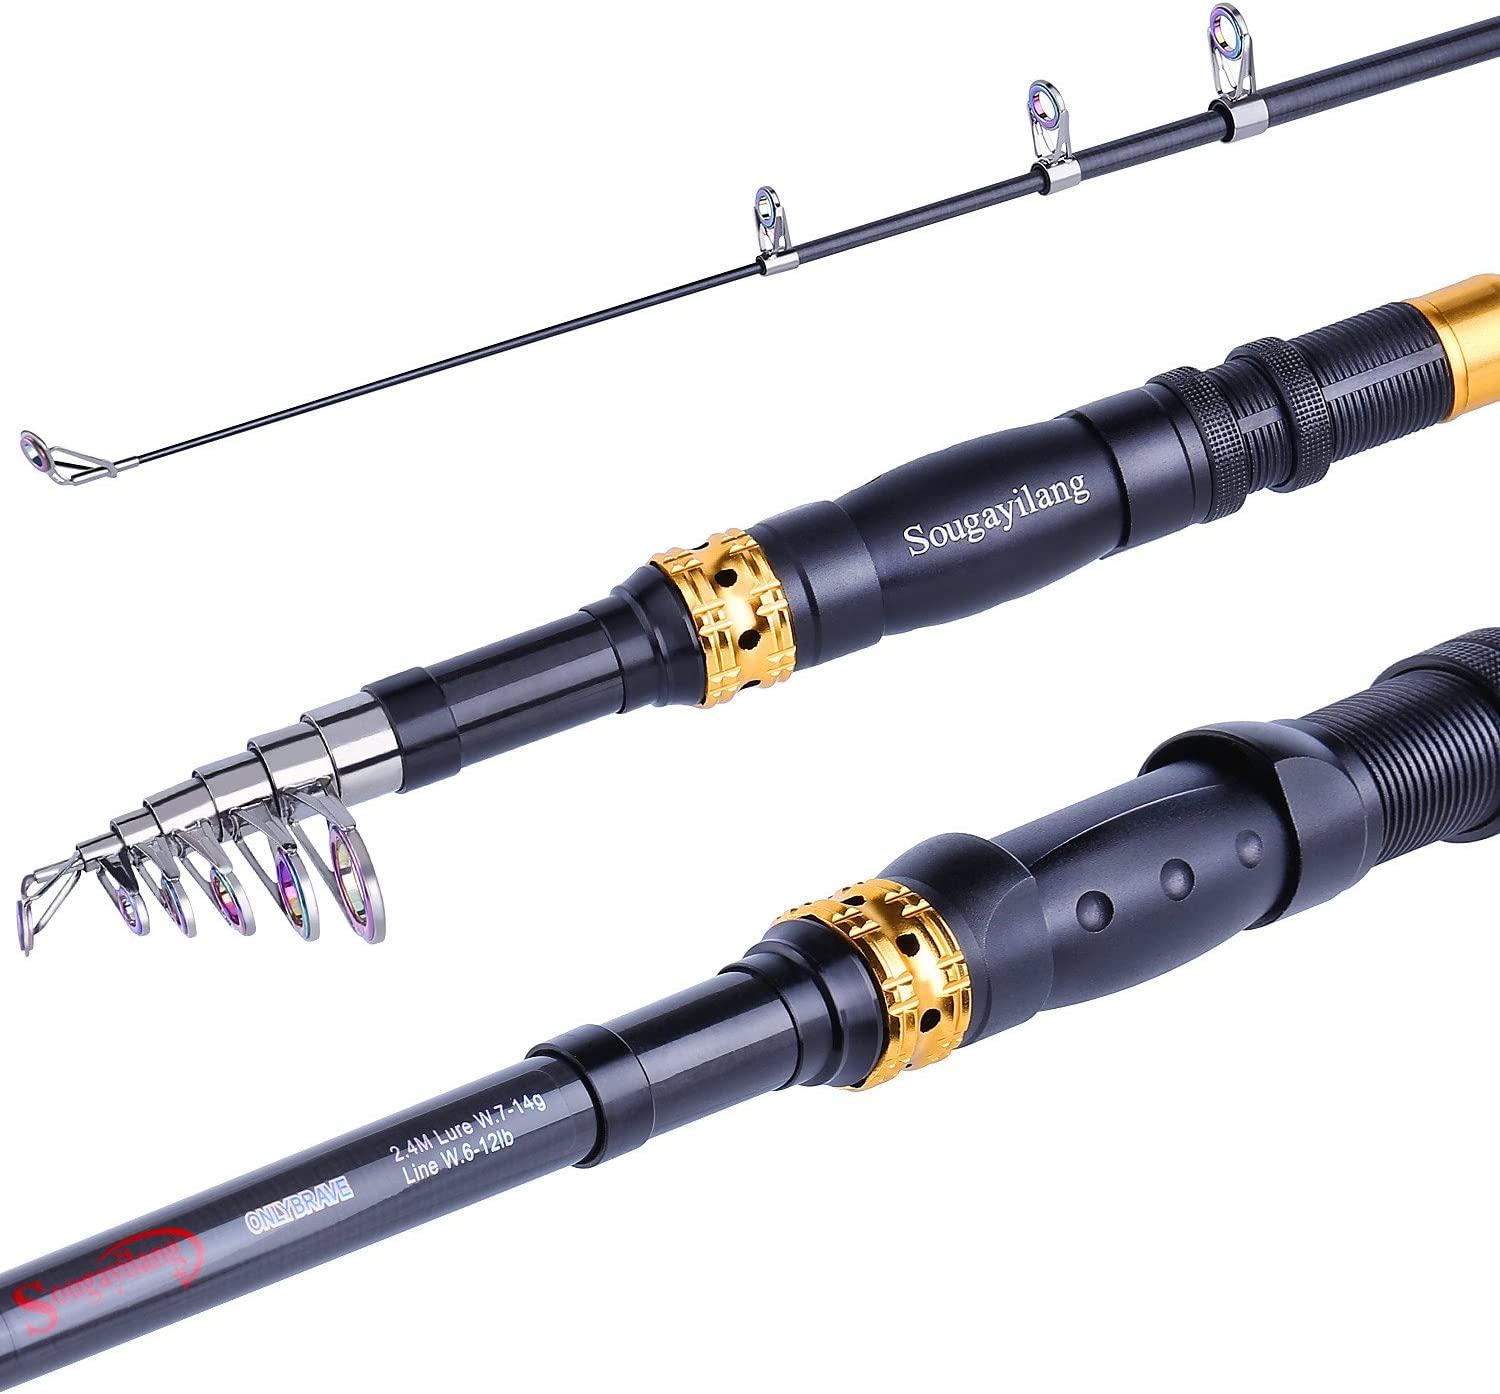 New Telescopic Sea Fishing Rod, Trout Rod, Compact Long-Range Bait